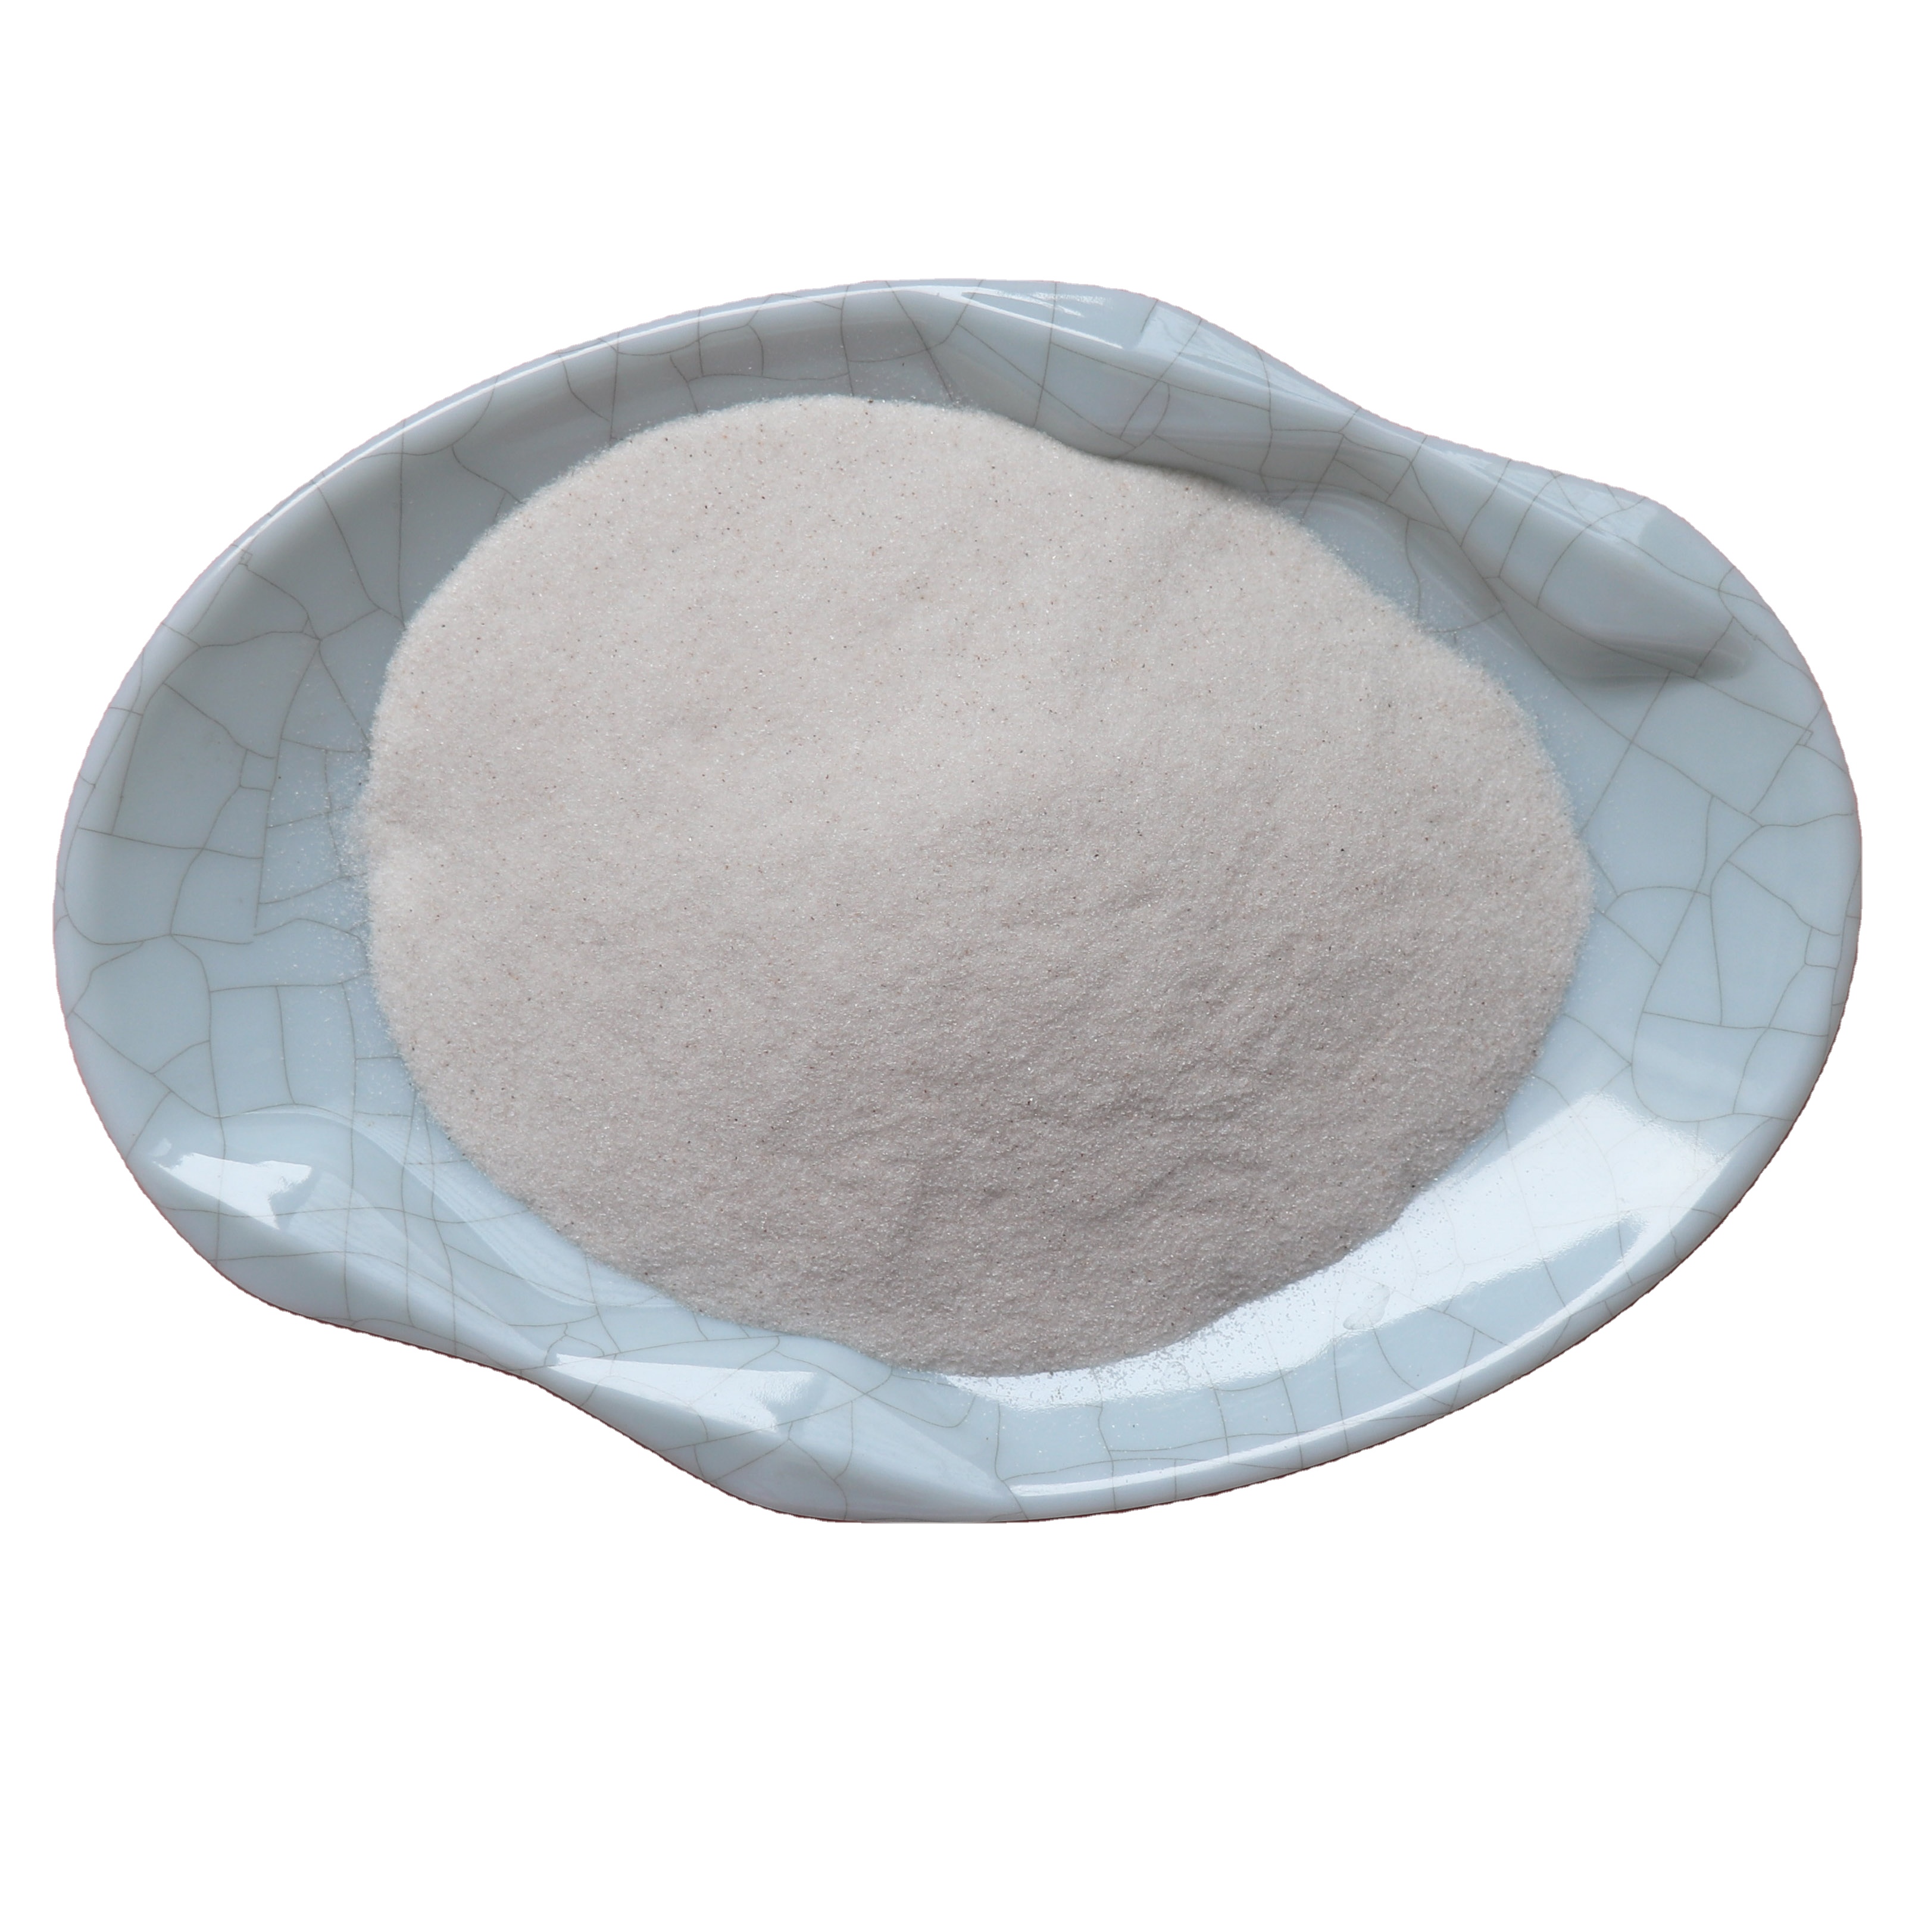 2022 Good Quality Cat Litter Sand - 50-150 Micron high grade fused powder pure fine white colored quartz silica sand – Chico